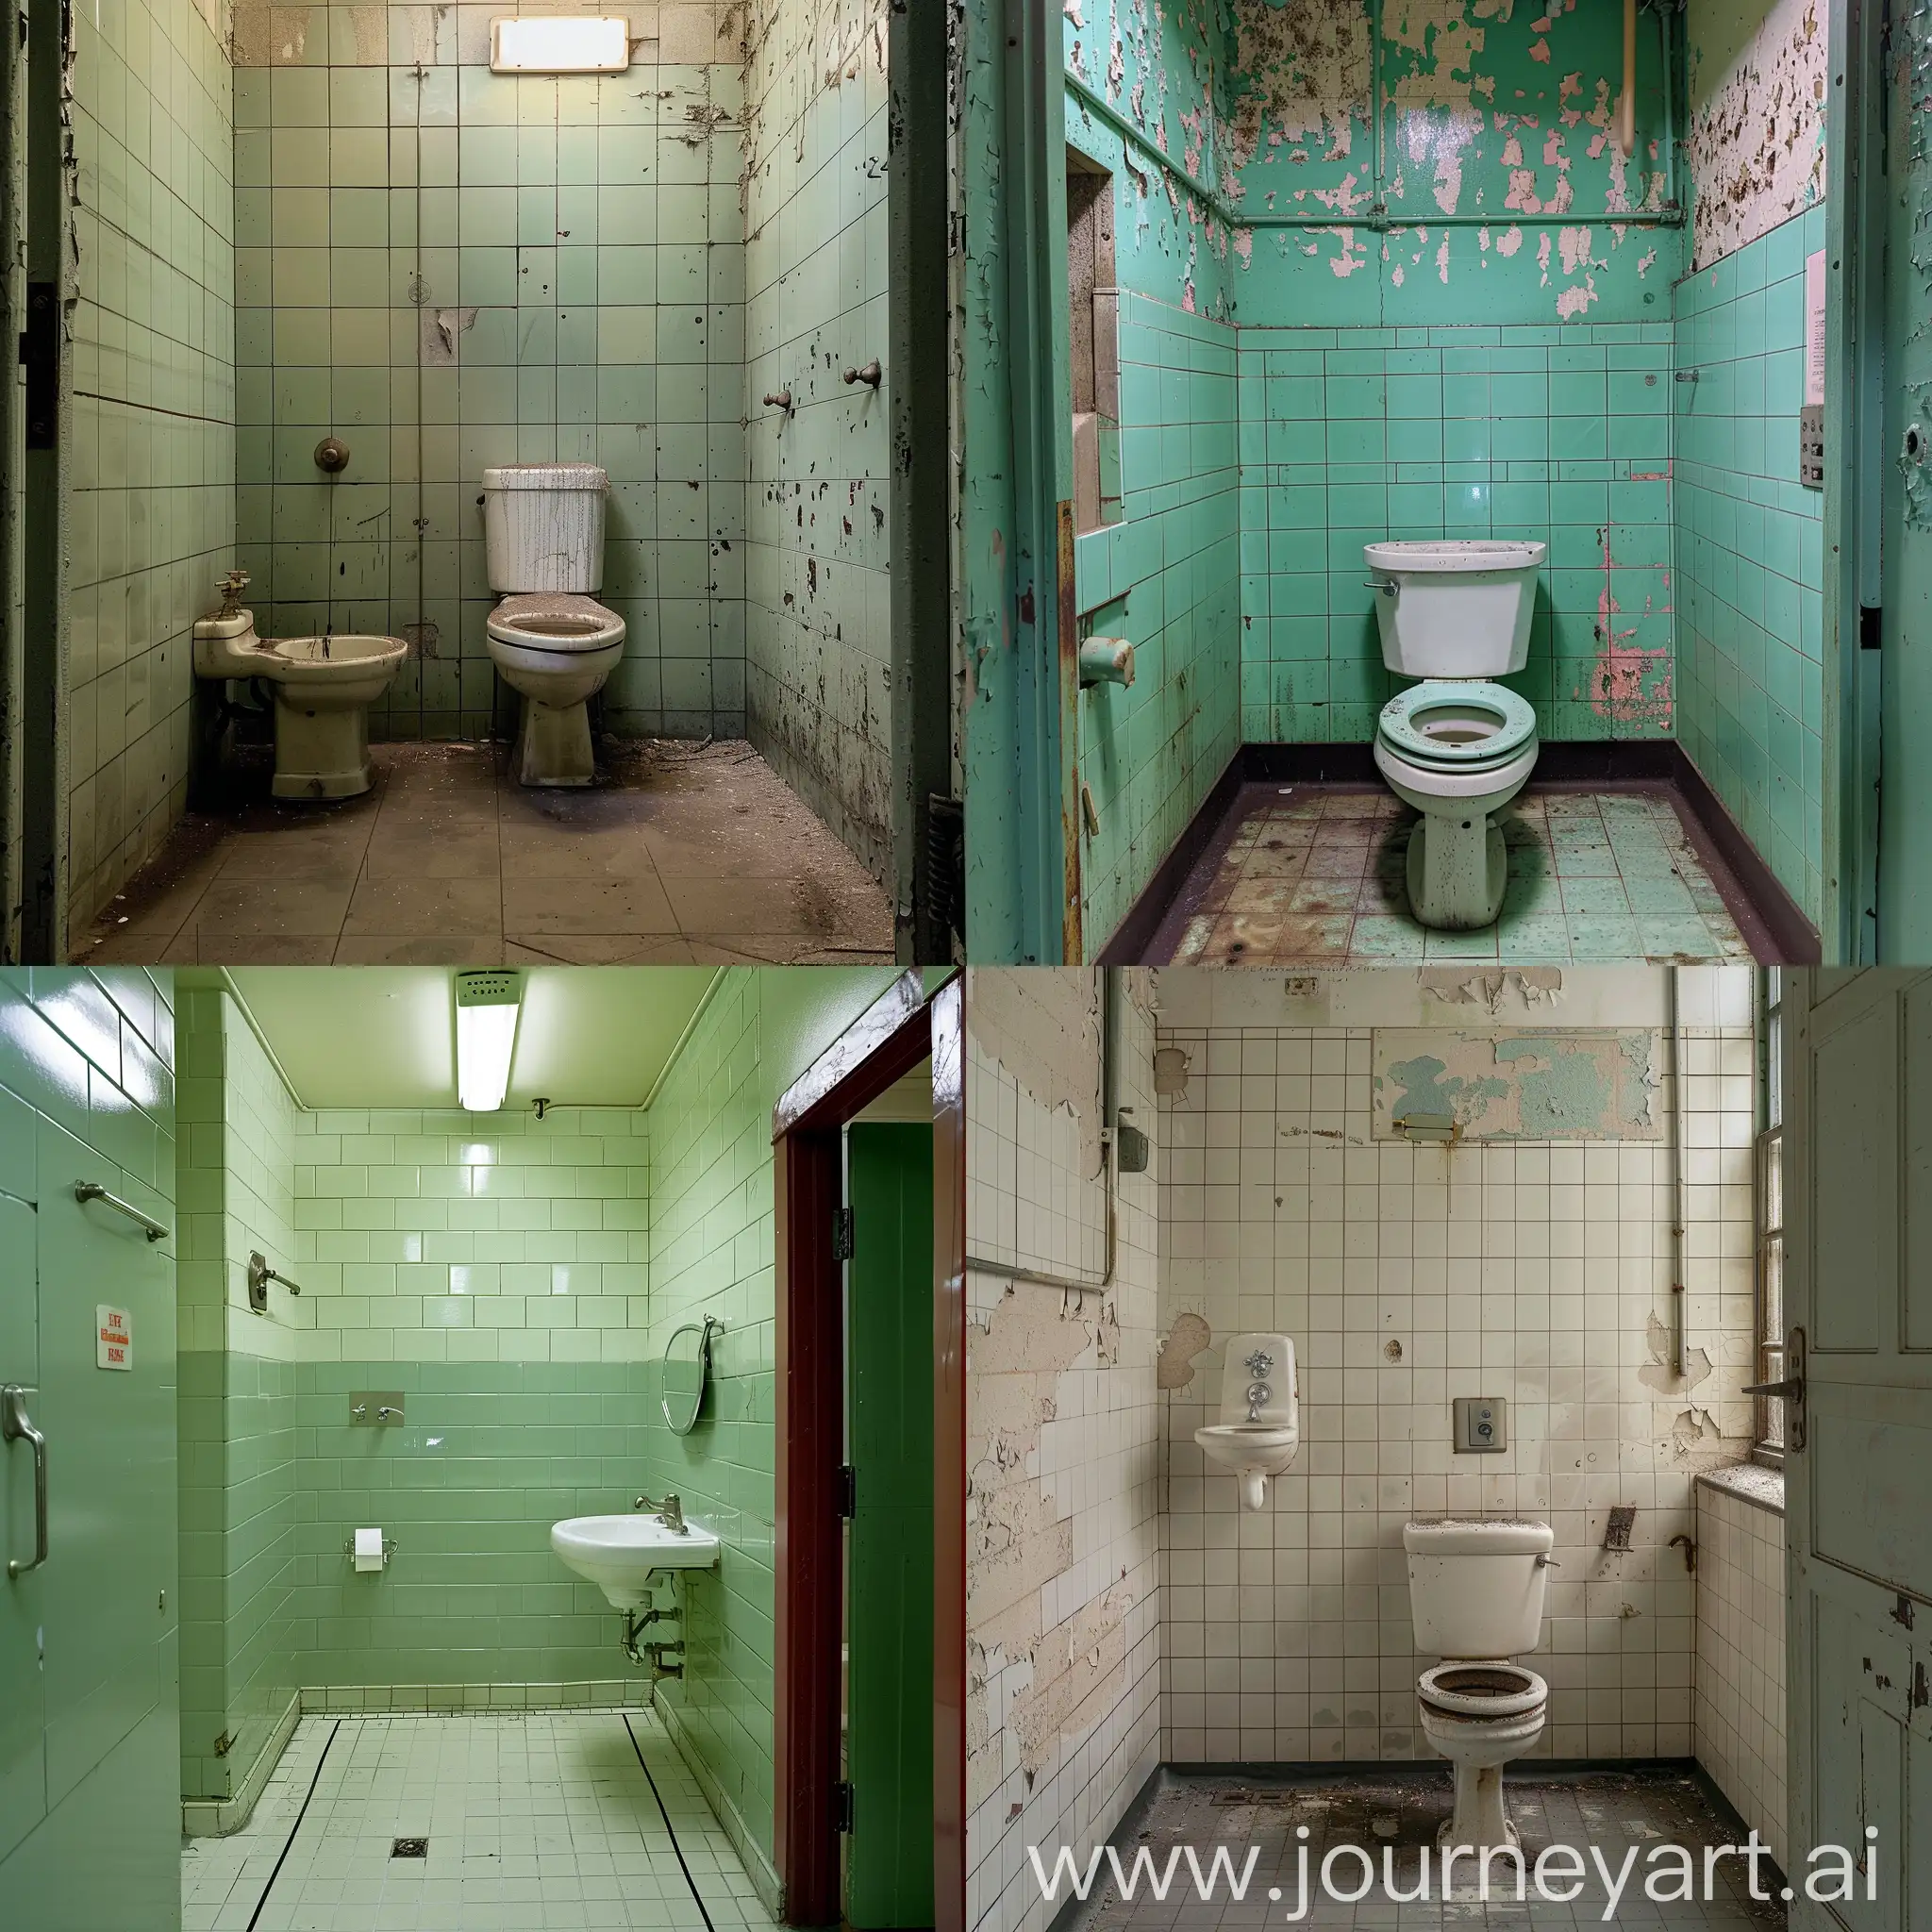  the last meter's bathroom, focusing on the last restroom